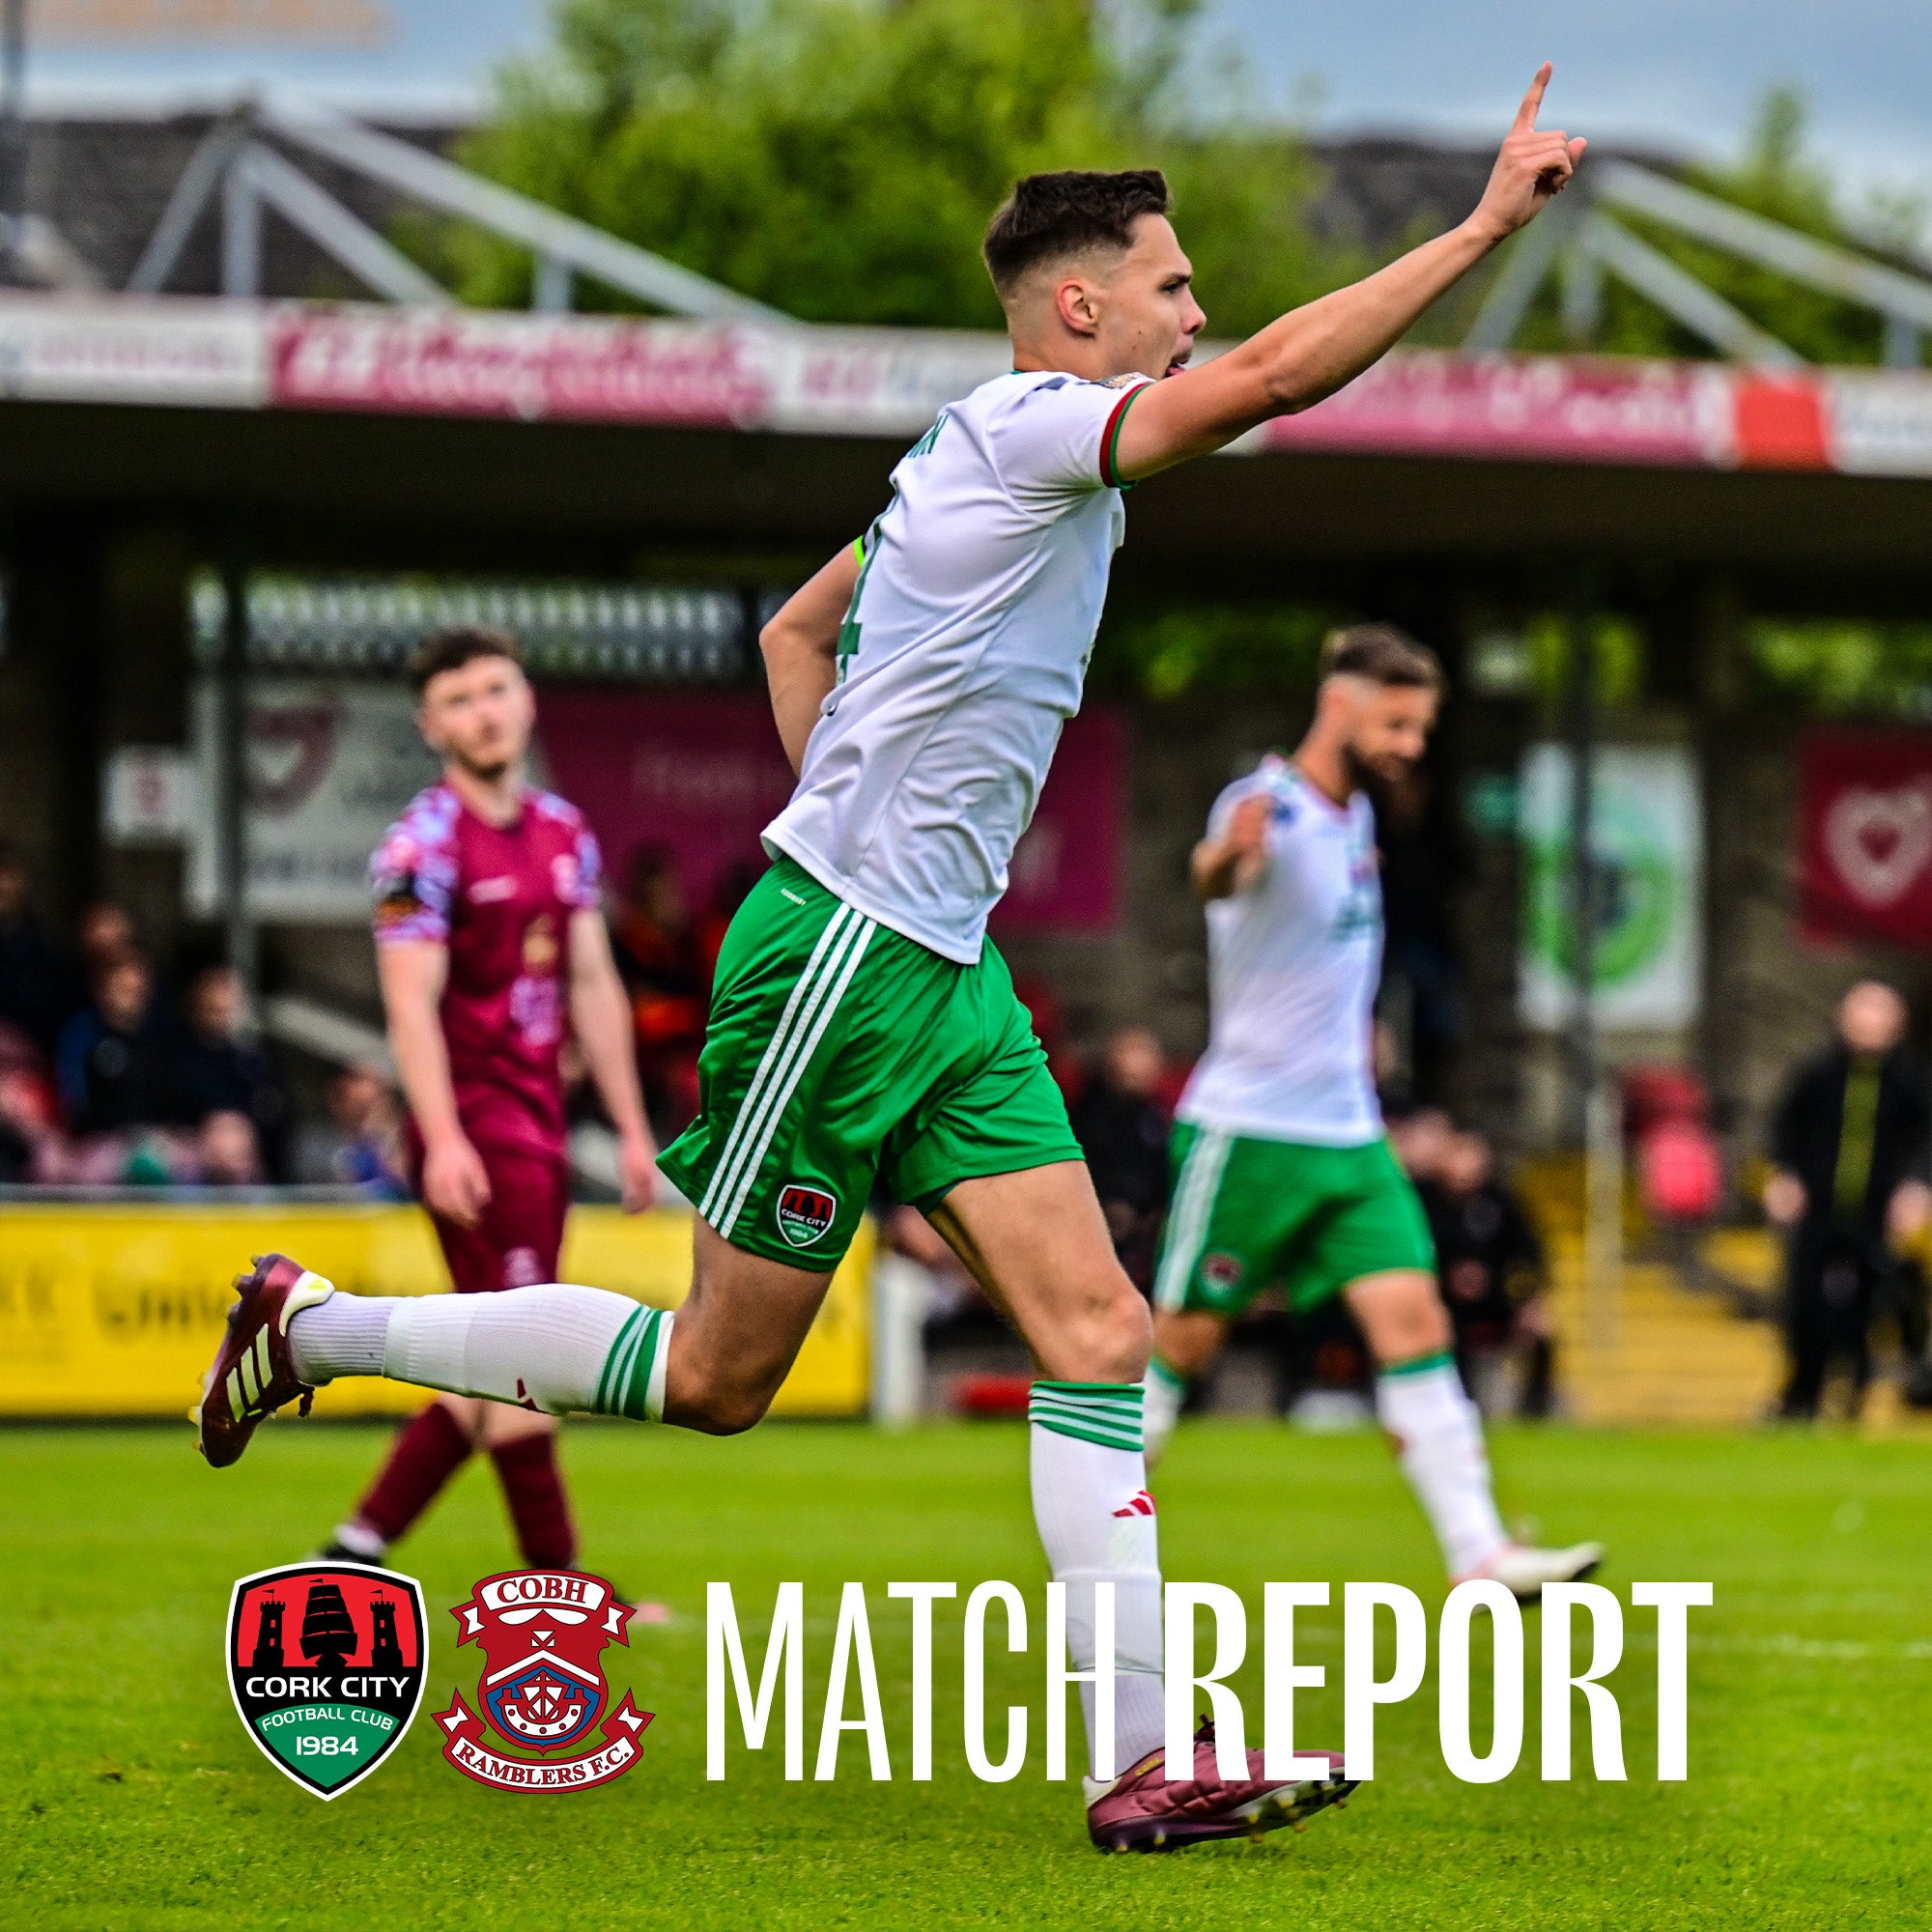 Match Report: City 4-1 Cobh Ramblers